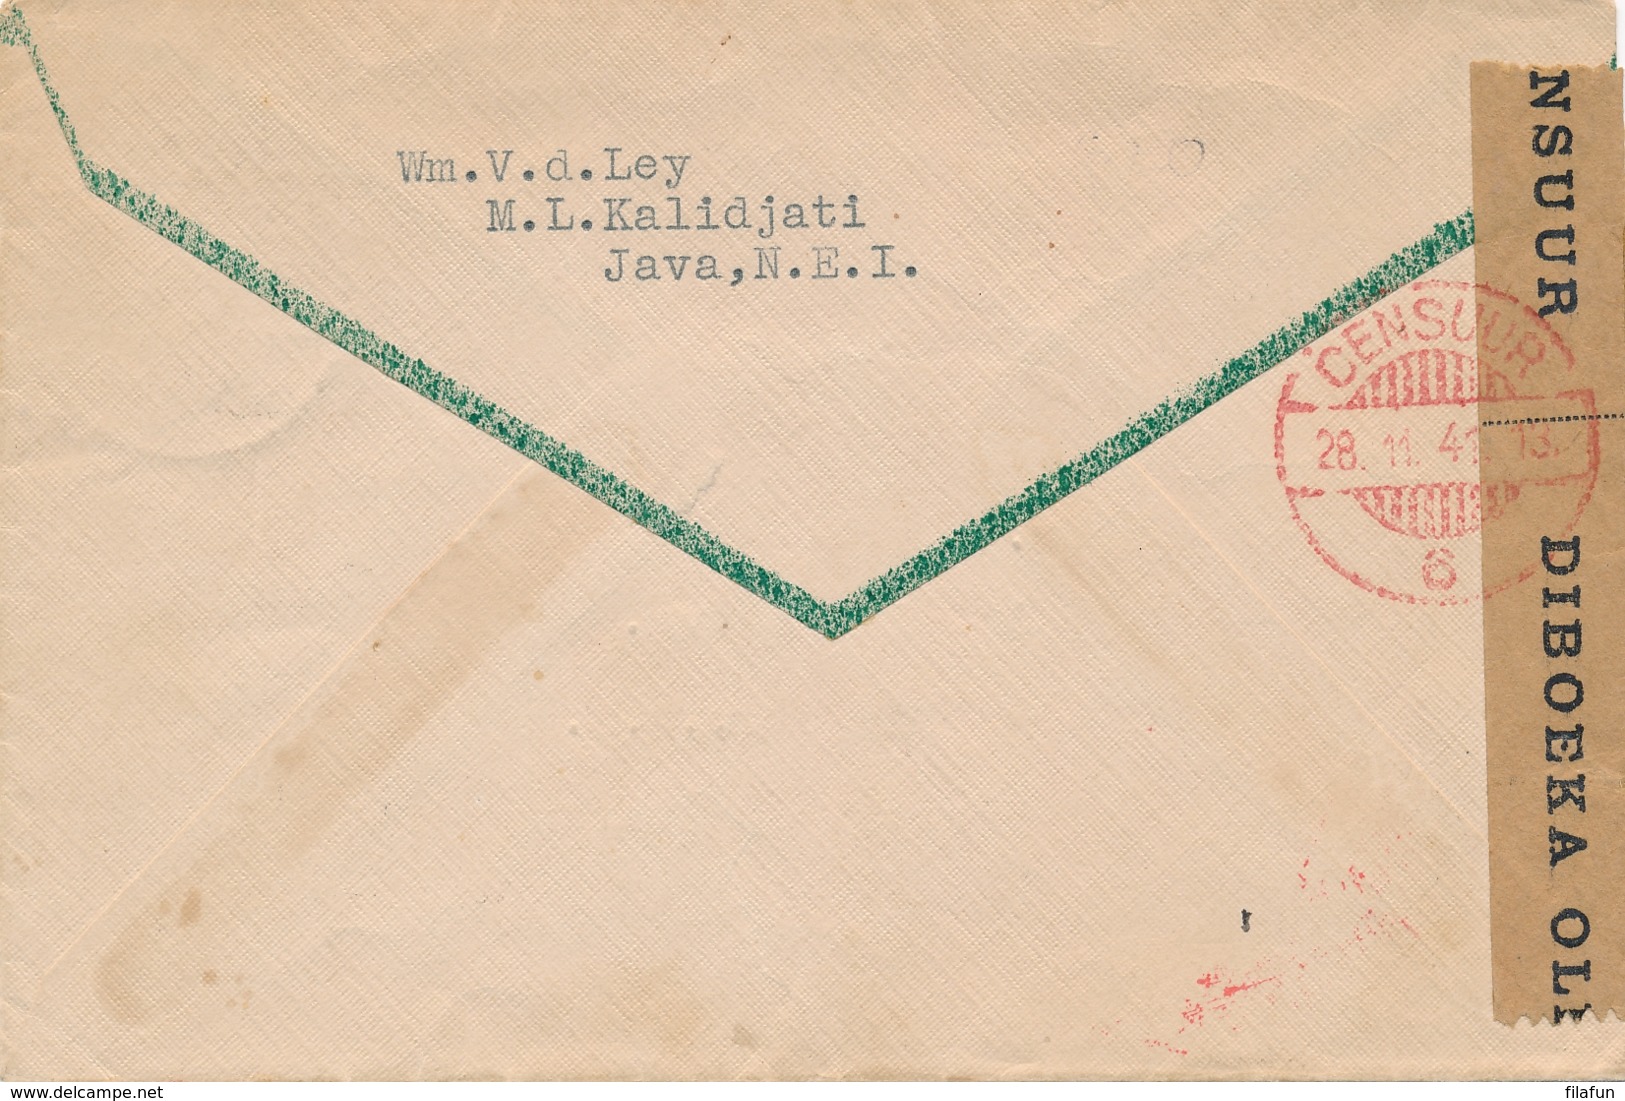 Nederlands Indië - 1941 - 15 Cent Konijnenburg Op Censored Cover Van LB KALIDJATI Naar New York / USA - Nederlands-Indië